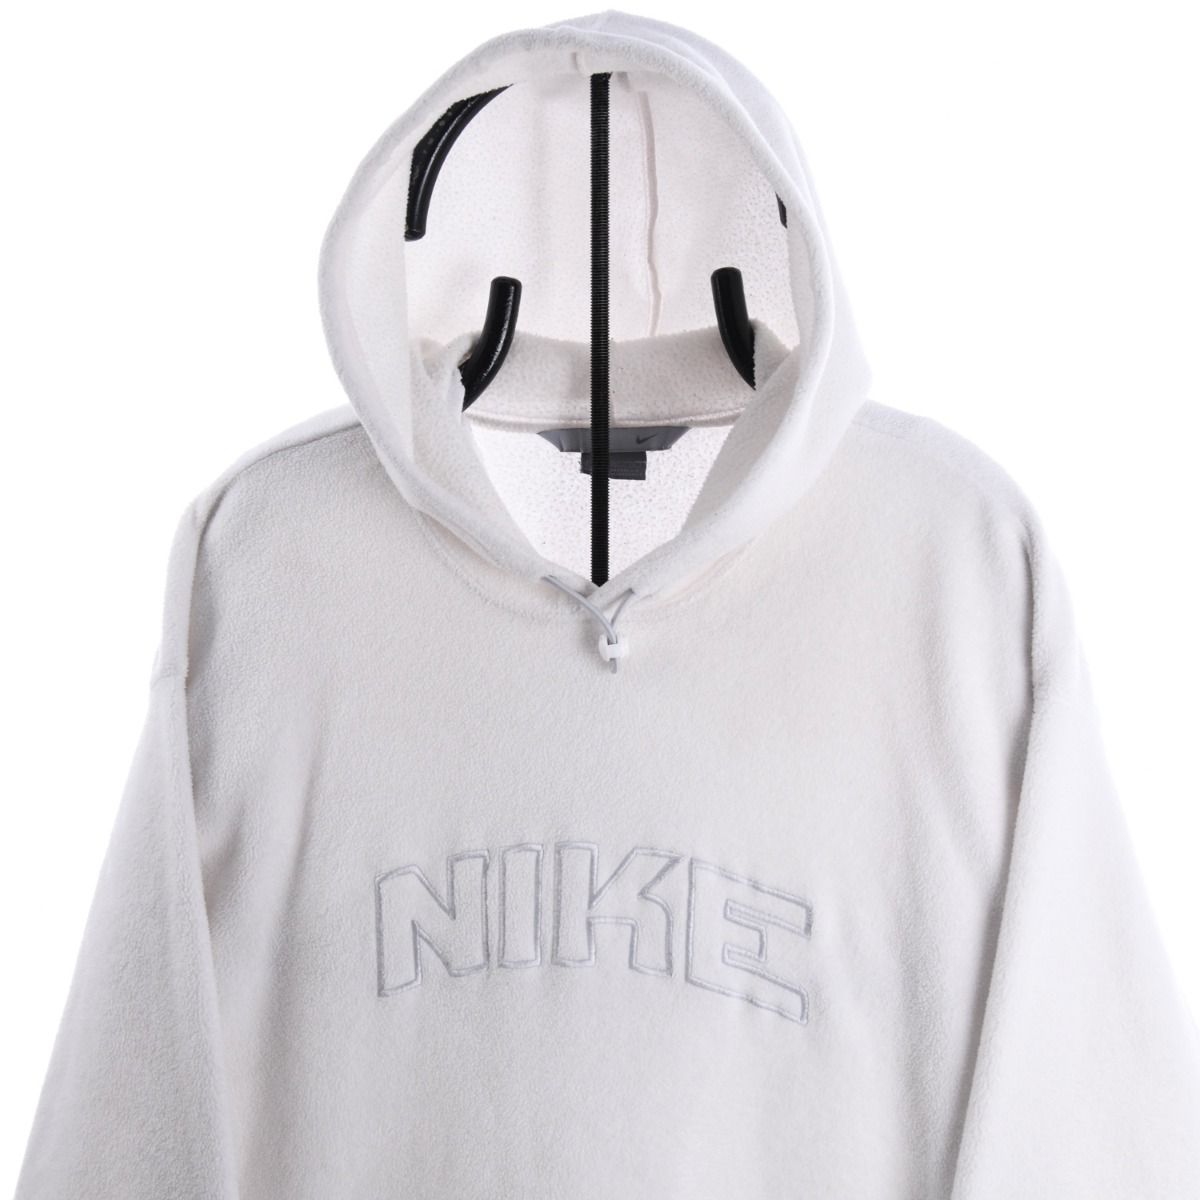 Nike Early 2000s Fleece White Hoodie